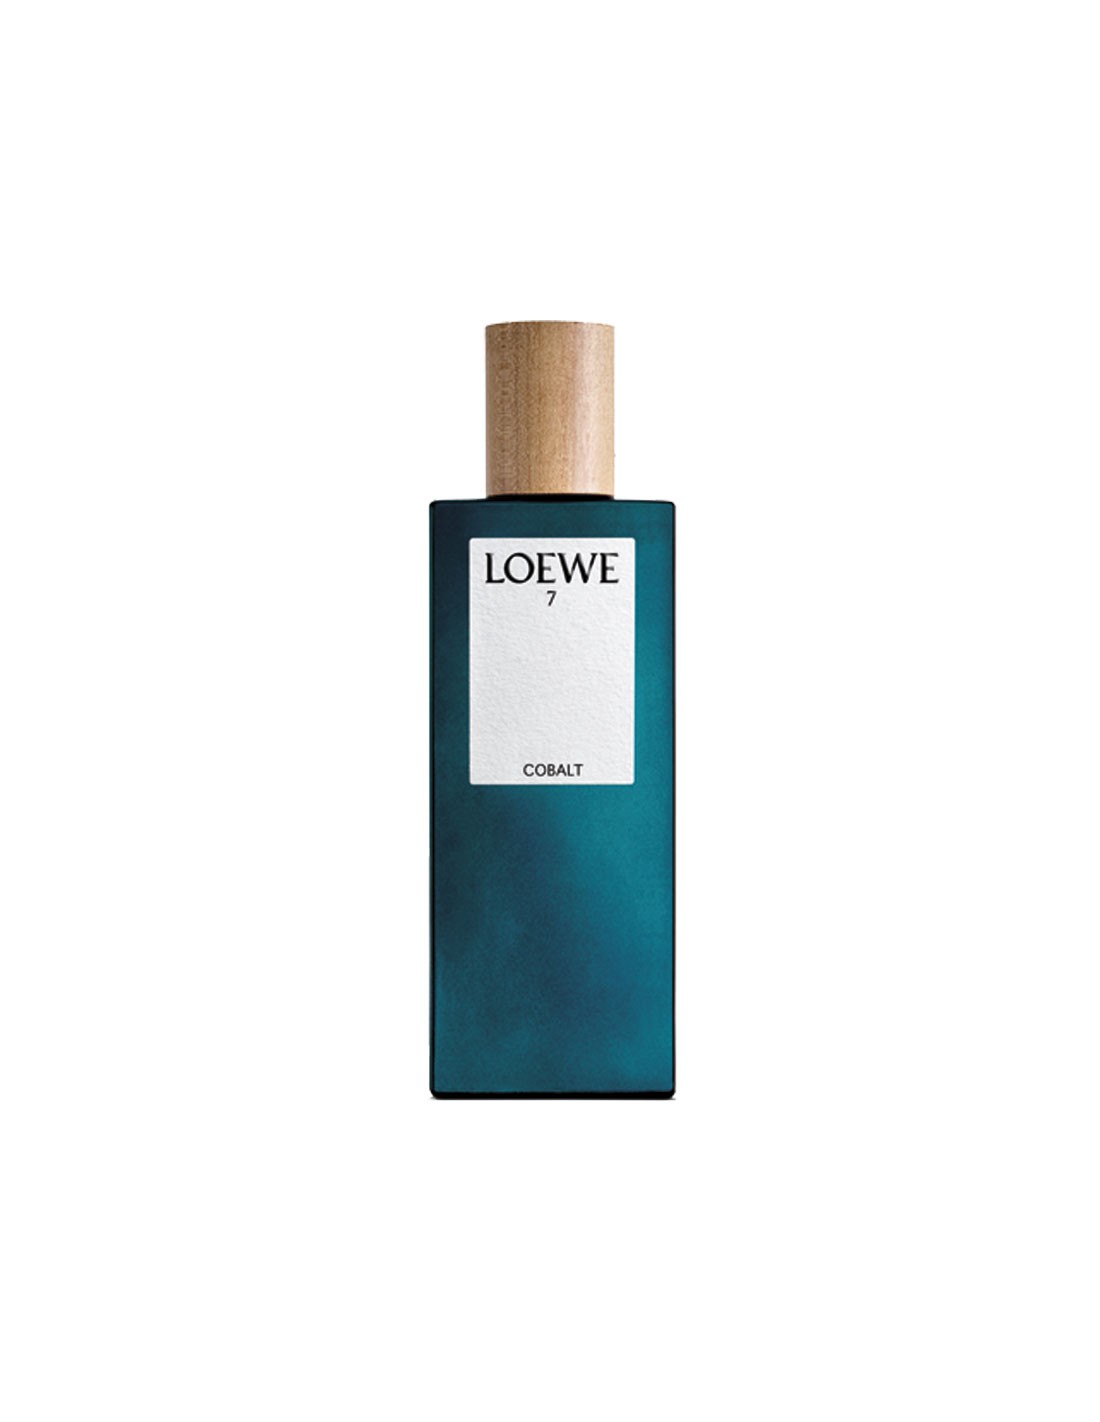 Loewe 7 Cobalt Eau De Parfum Spray 100ml